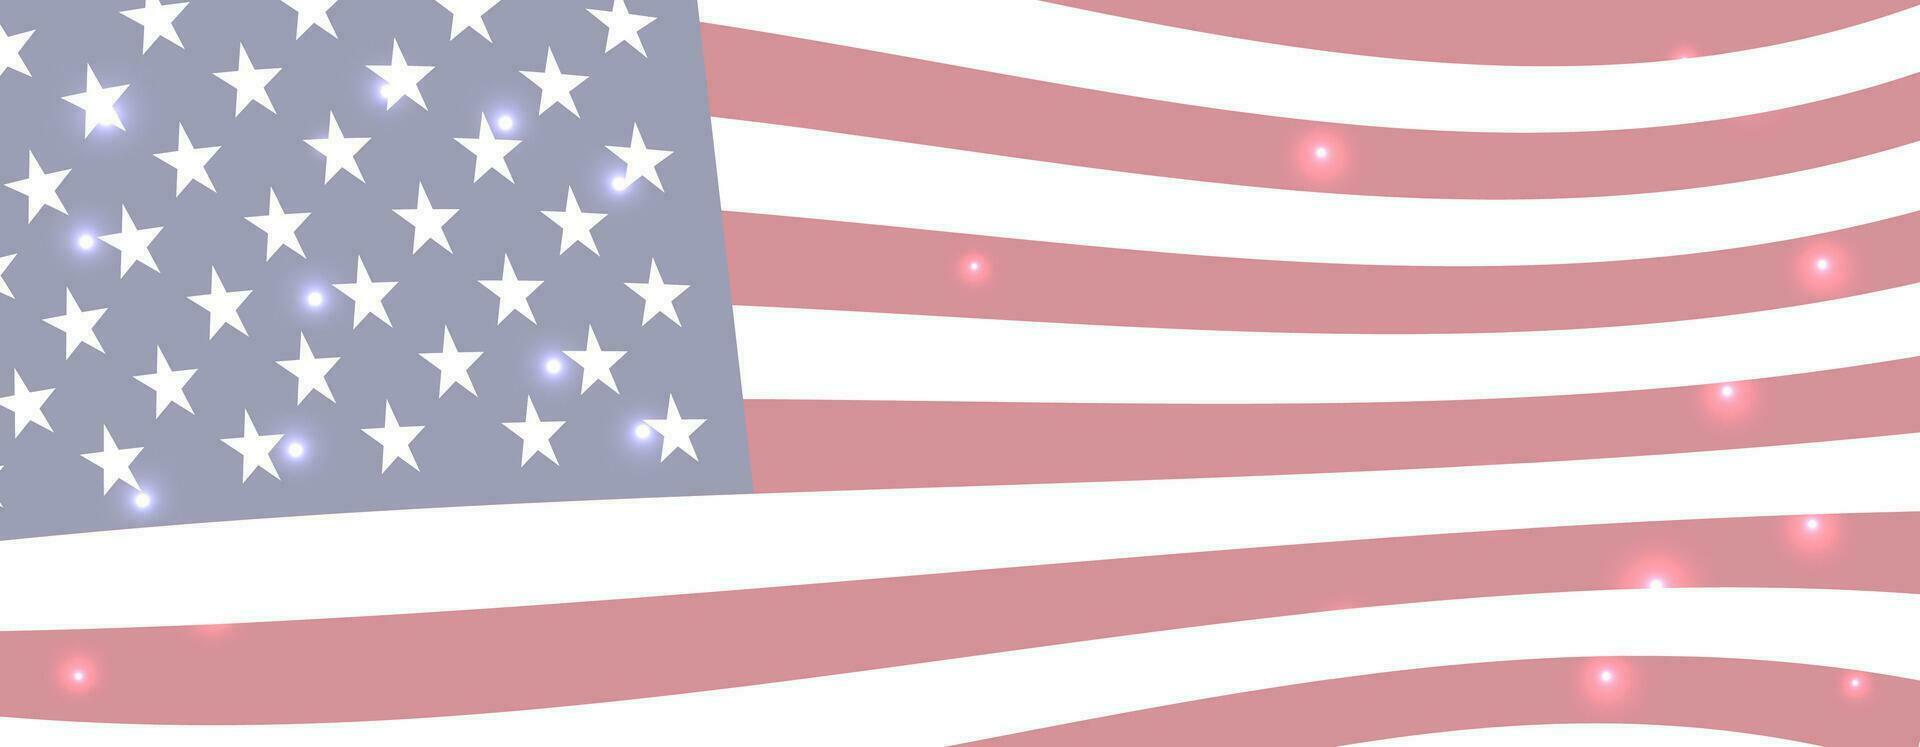 United States vector banner. USA national flag background. American rectangular horizontal web banner